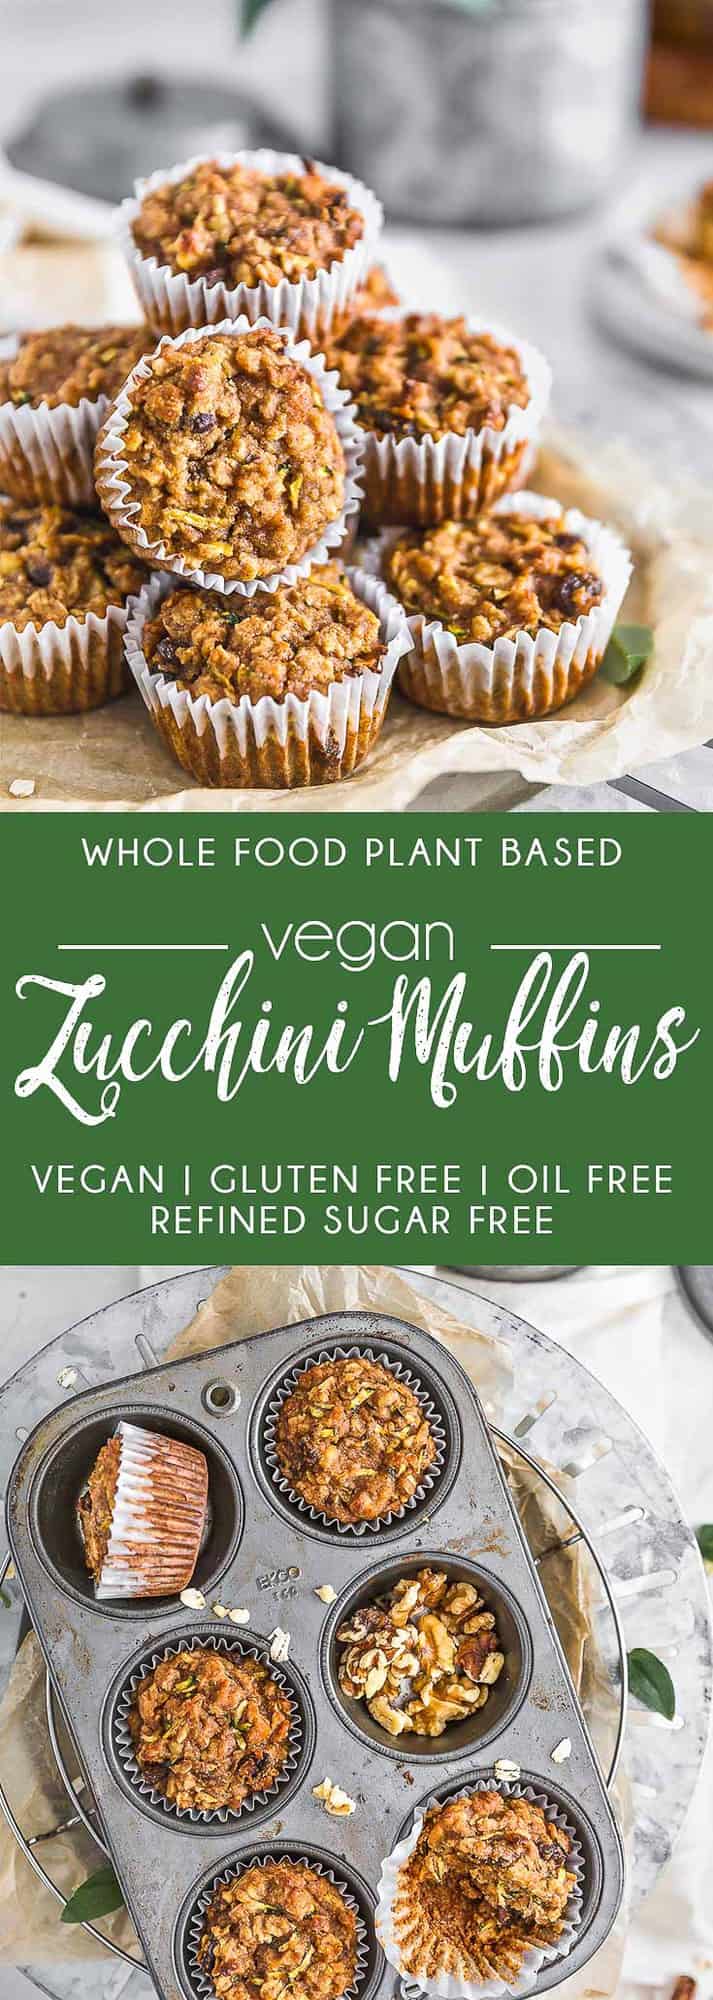 Vegan Zucchini Muffins, zucchini muffins, vegan dessert, muffins, zucchini, dessert, plant based dessert, plant based, vegan, vegetarian, whole food plant based, gluten free, recipe, wfpb, healthy, healthy vegan, oil free, no refined sugar, no oil, refined sugar free, dairy free, sweets, healthy recipe, vegan meal